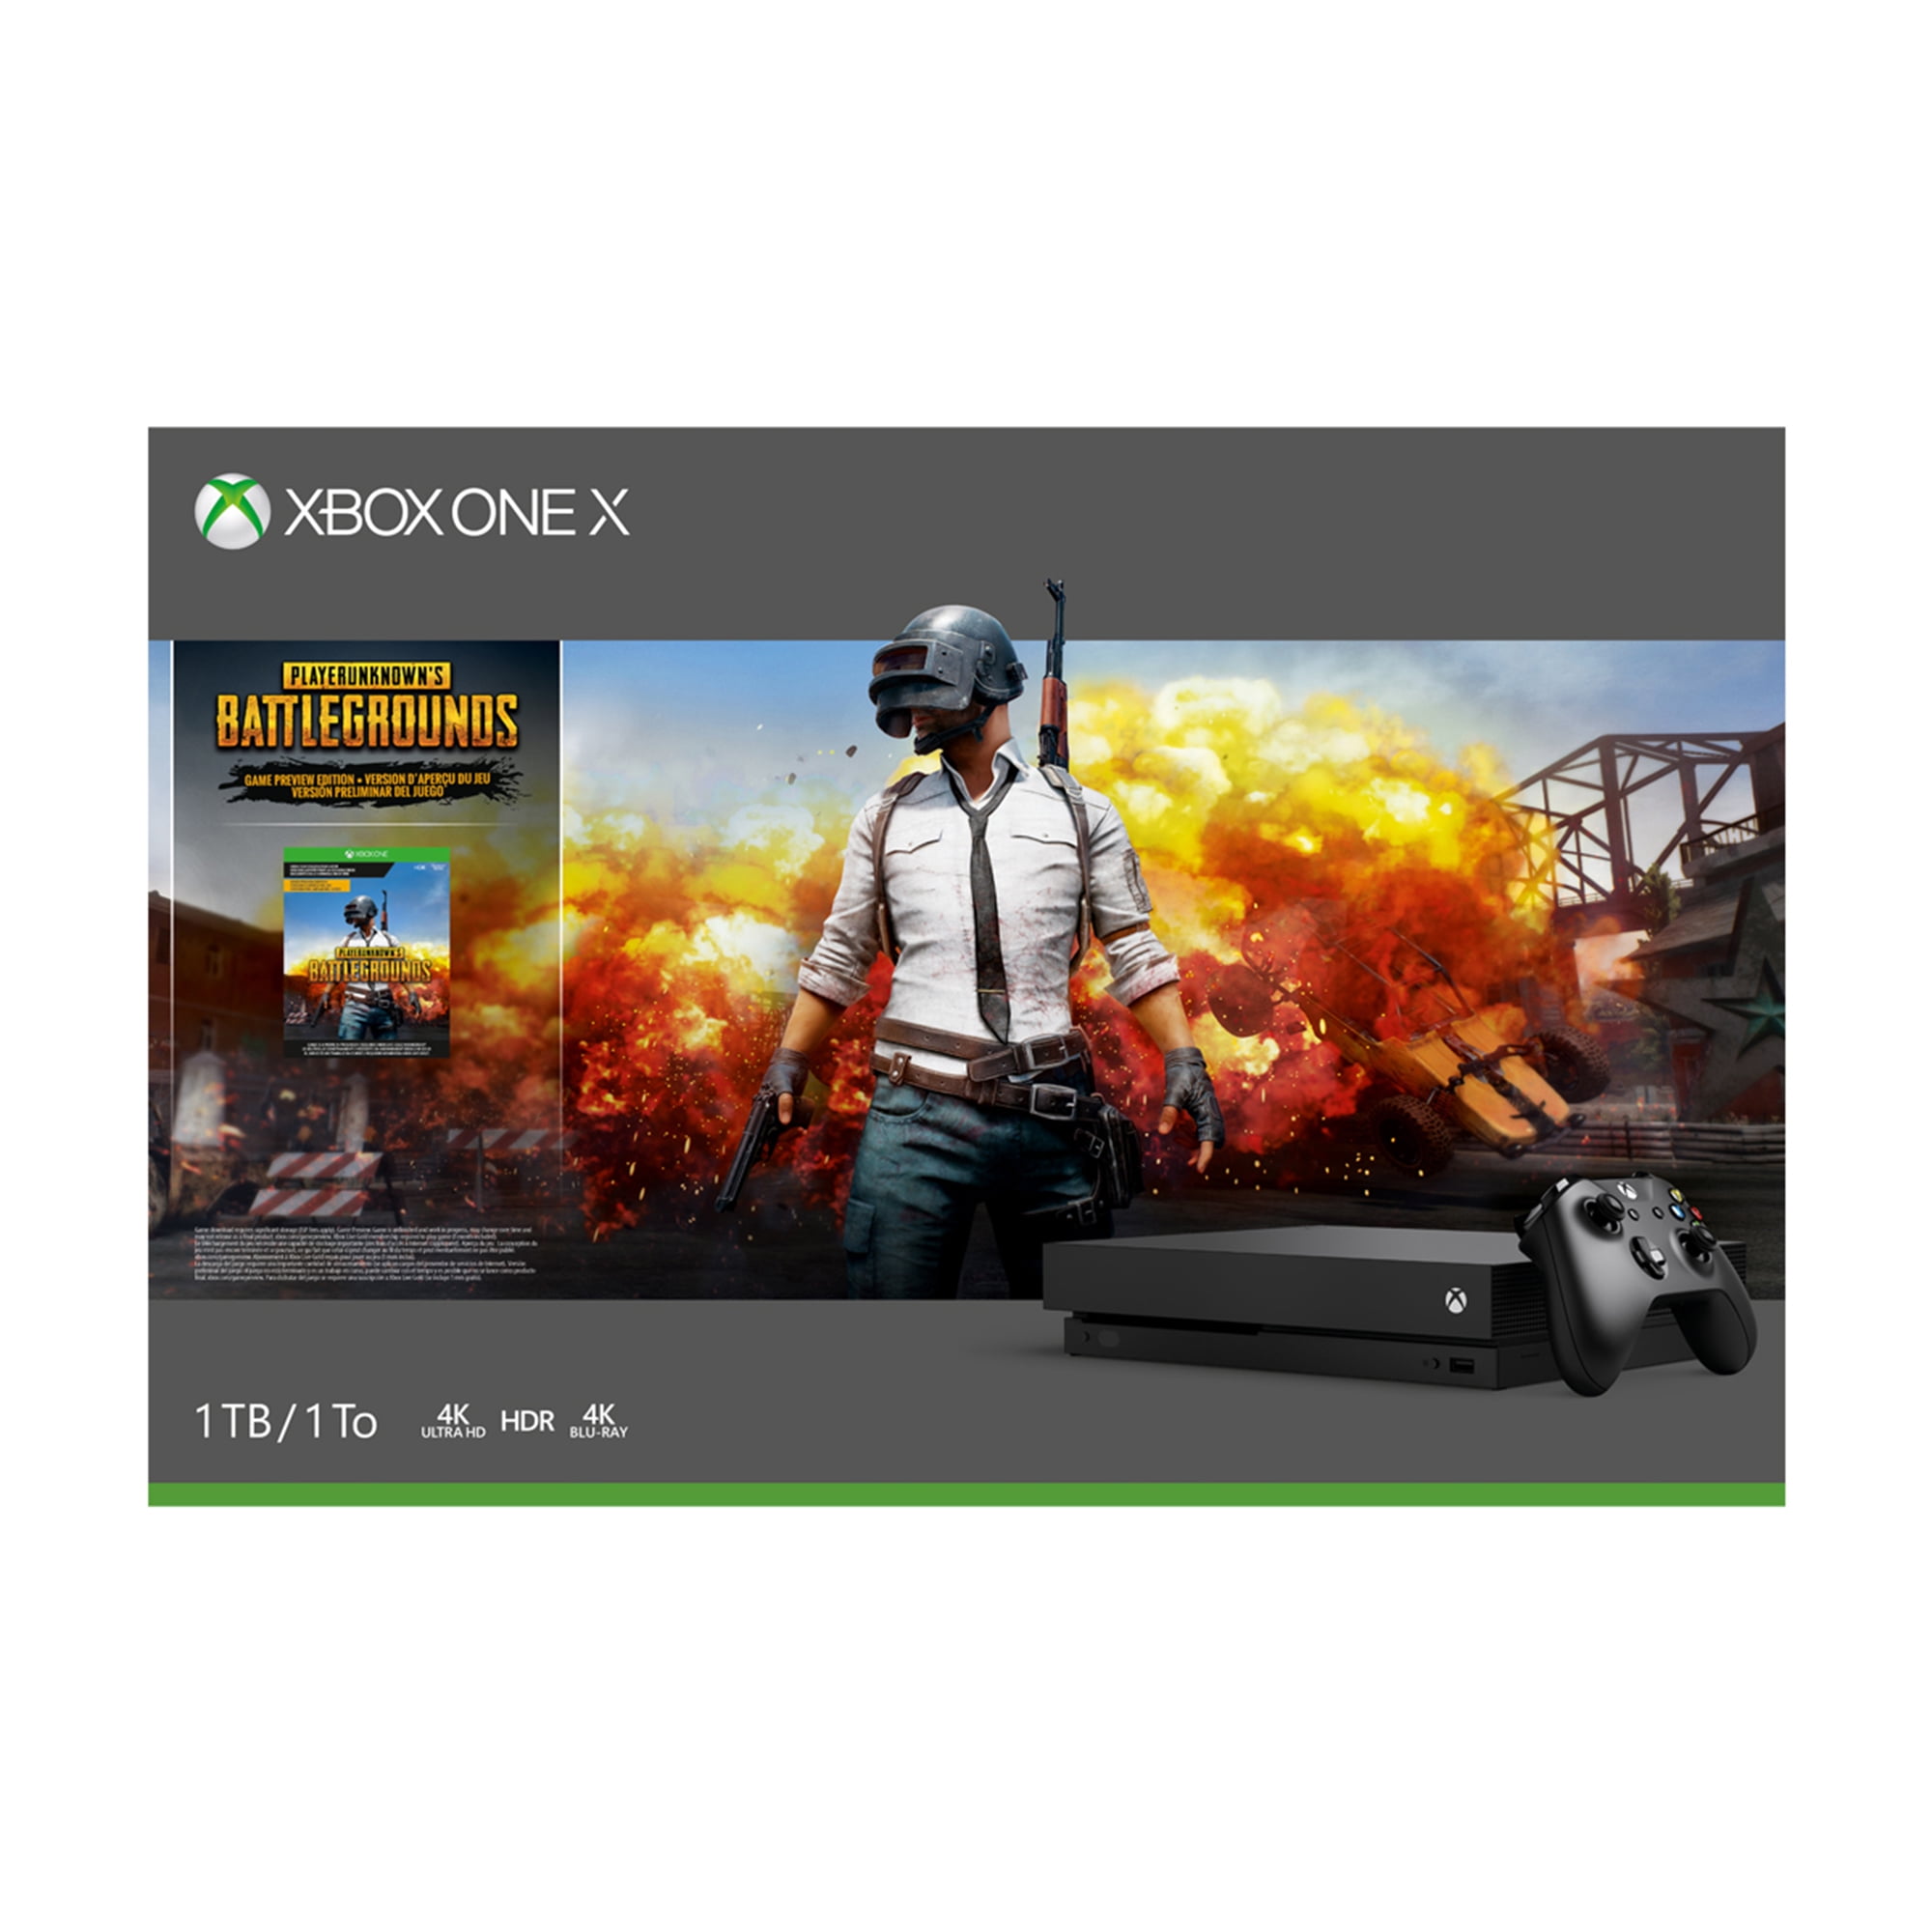 pebermynte Tilbageholde Shipley Microsoft Xbox One X PLAYERUNKNOWN'S BATTLEGROUNDS Bundle, Black, CYV-00026  - Walmart.com